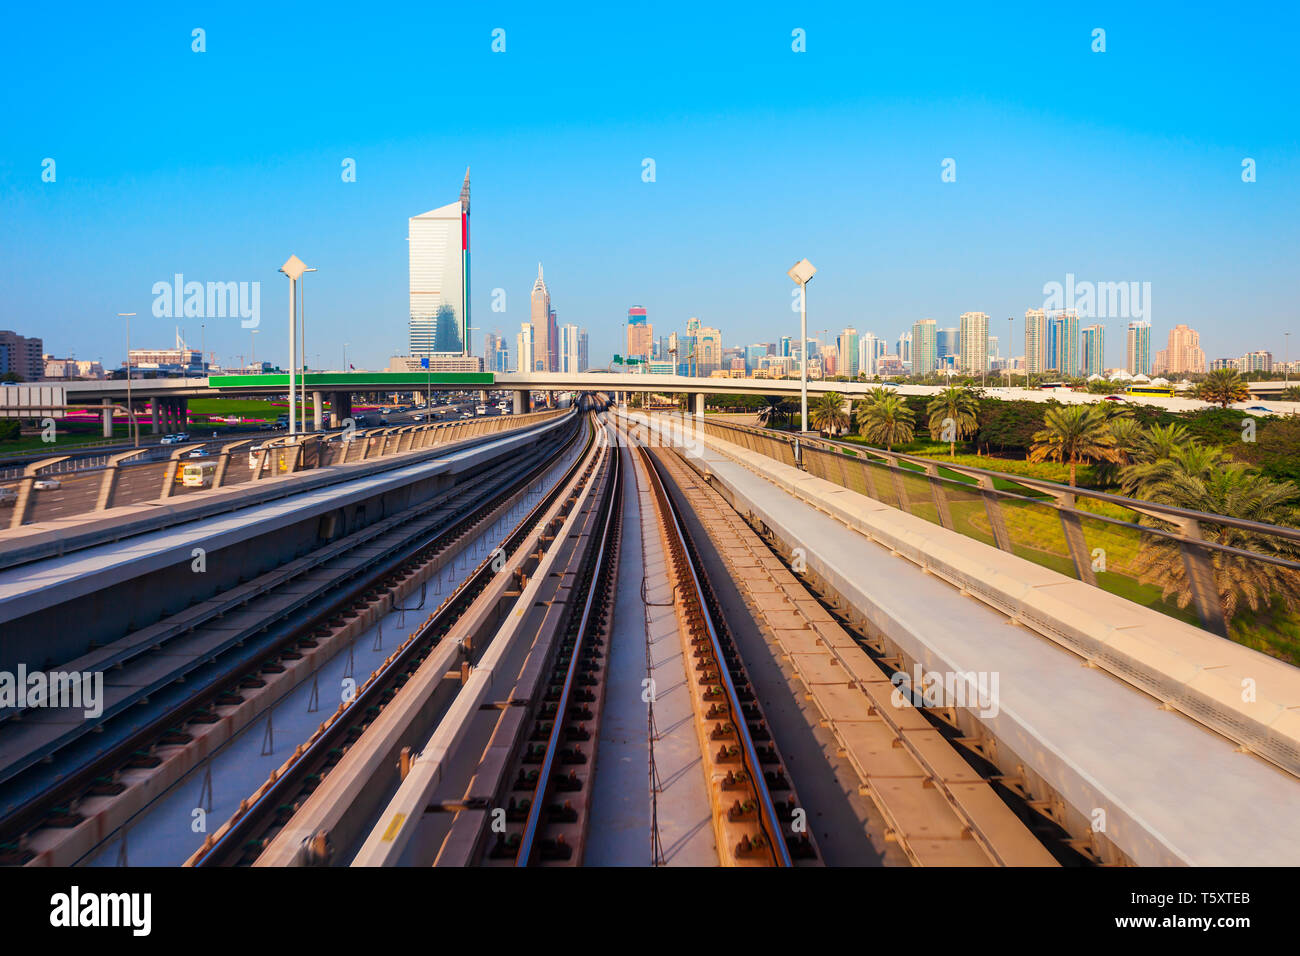 Dubai Metro train and Dubai city skyline in UAE Stock Photo